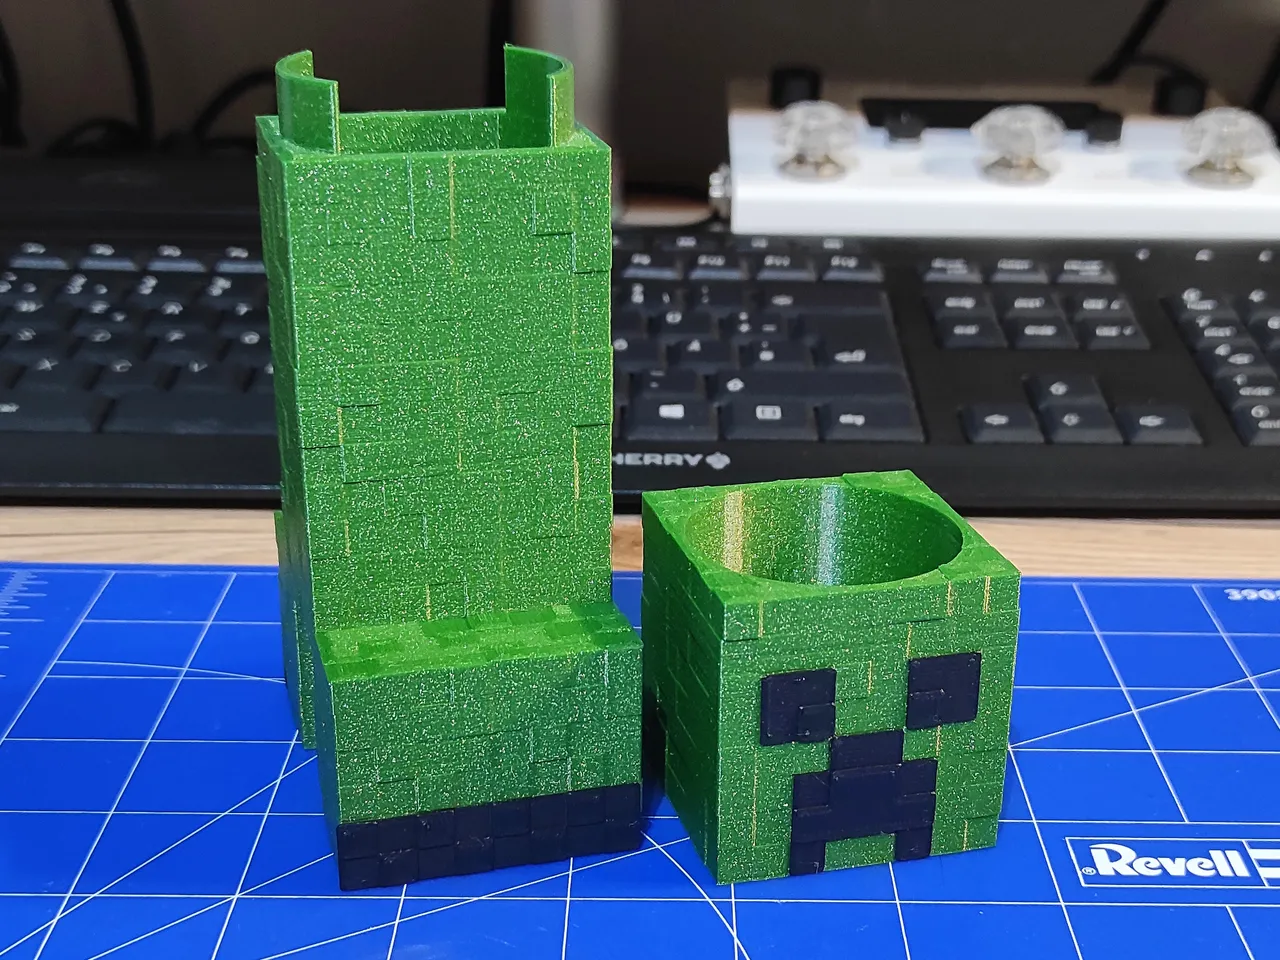 minecraft block 3D Models to Print - yeggi